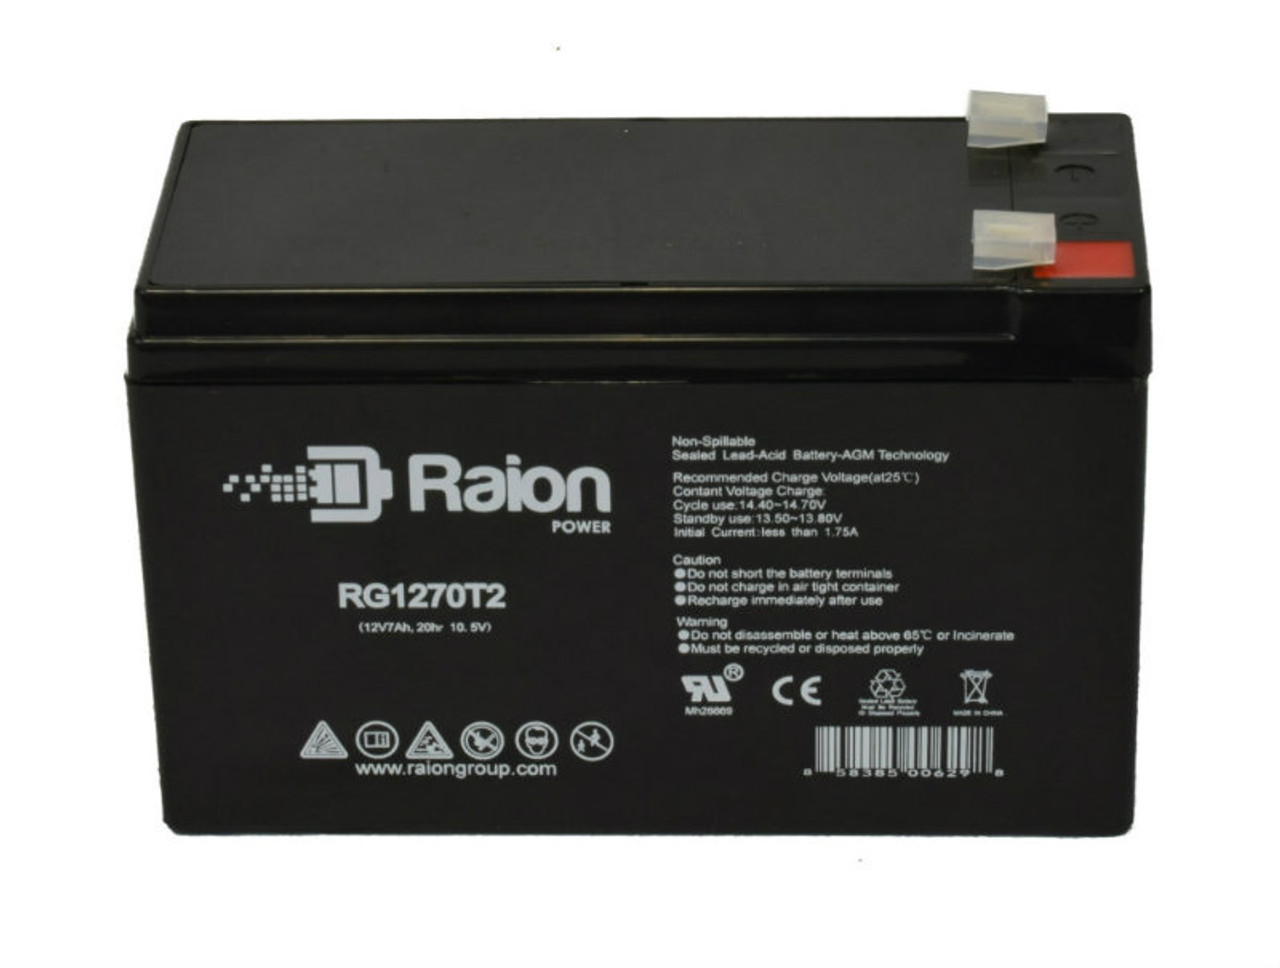 Raion Power RG1270T1 12V 7Ah Lead Acid Battery for Narco Narkomed Anesthesia 3B